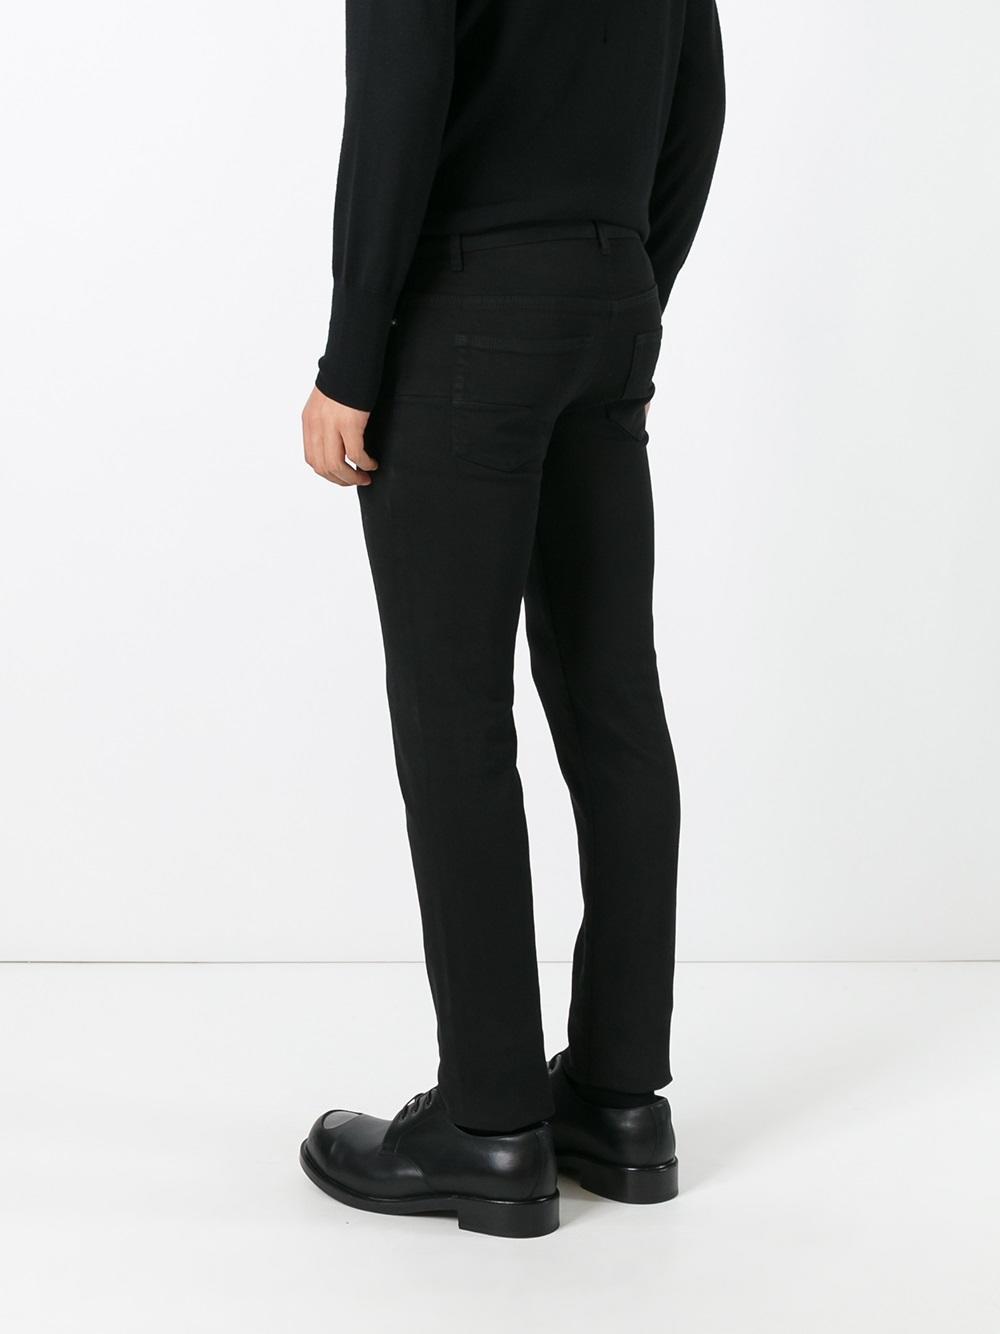 Lyst - Dior Homme Skinny Jeans in Black for Men